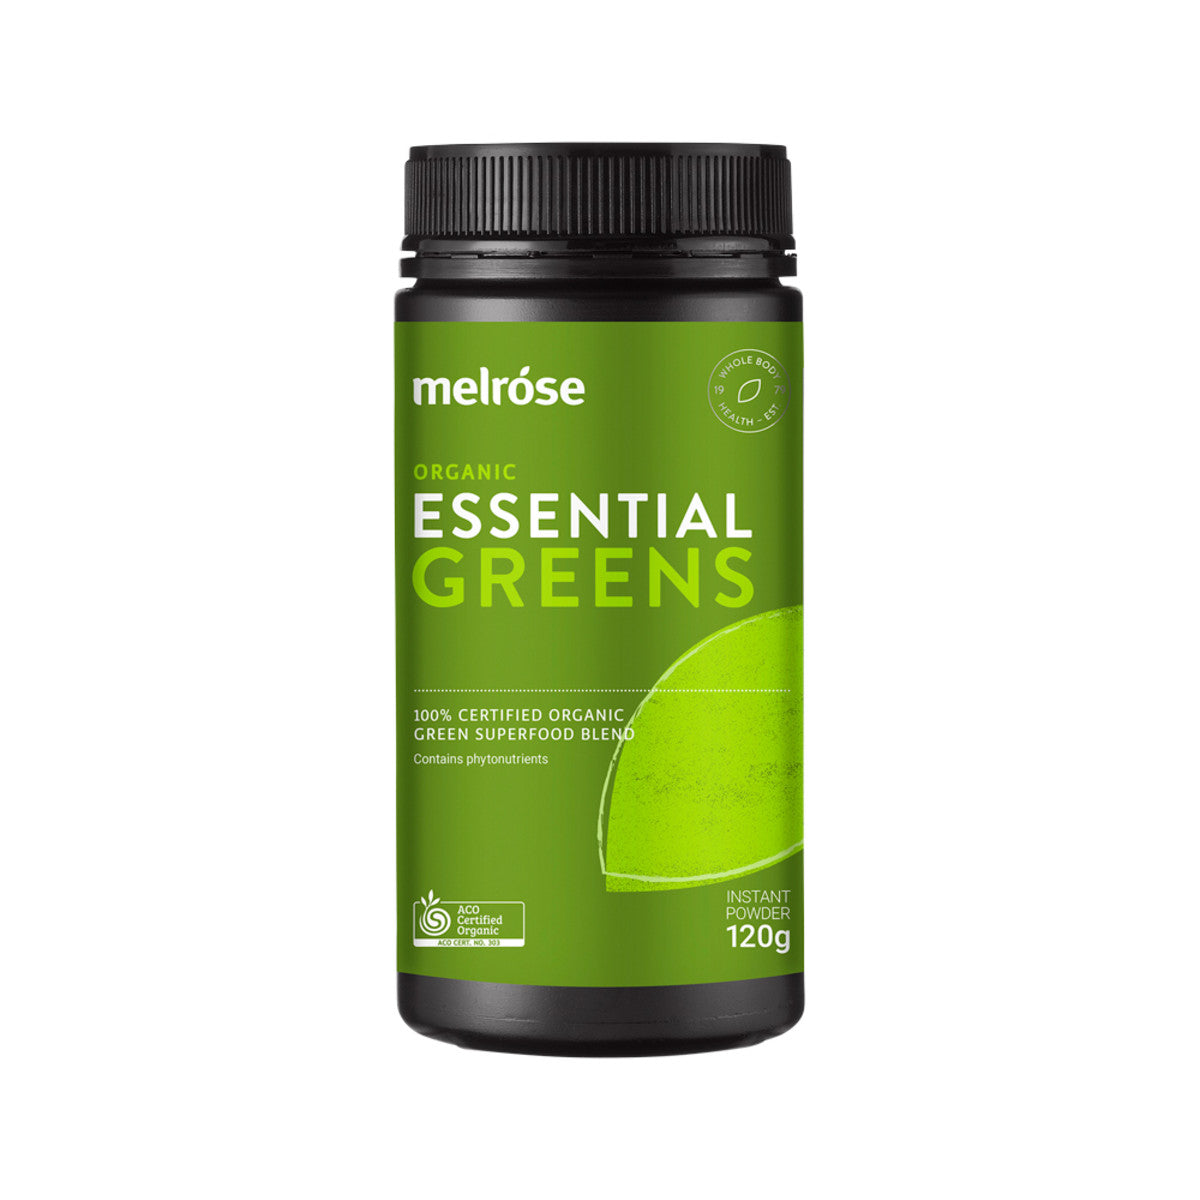 Melrose - Organic Essential Greens Powder